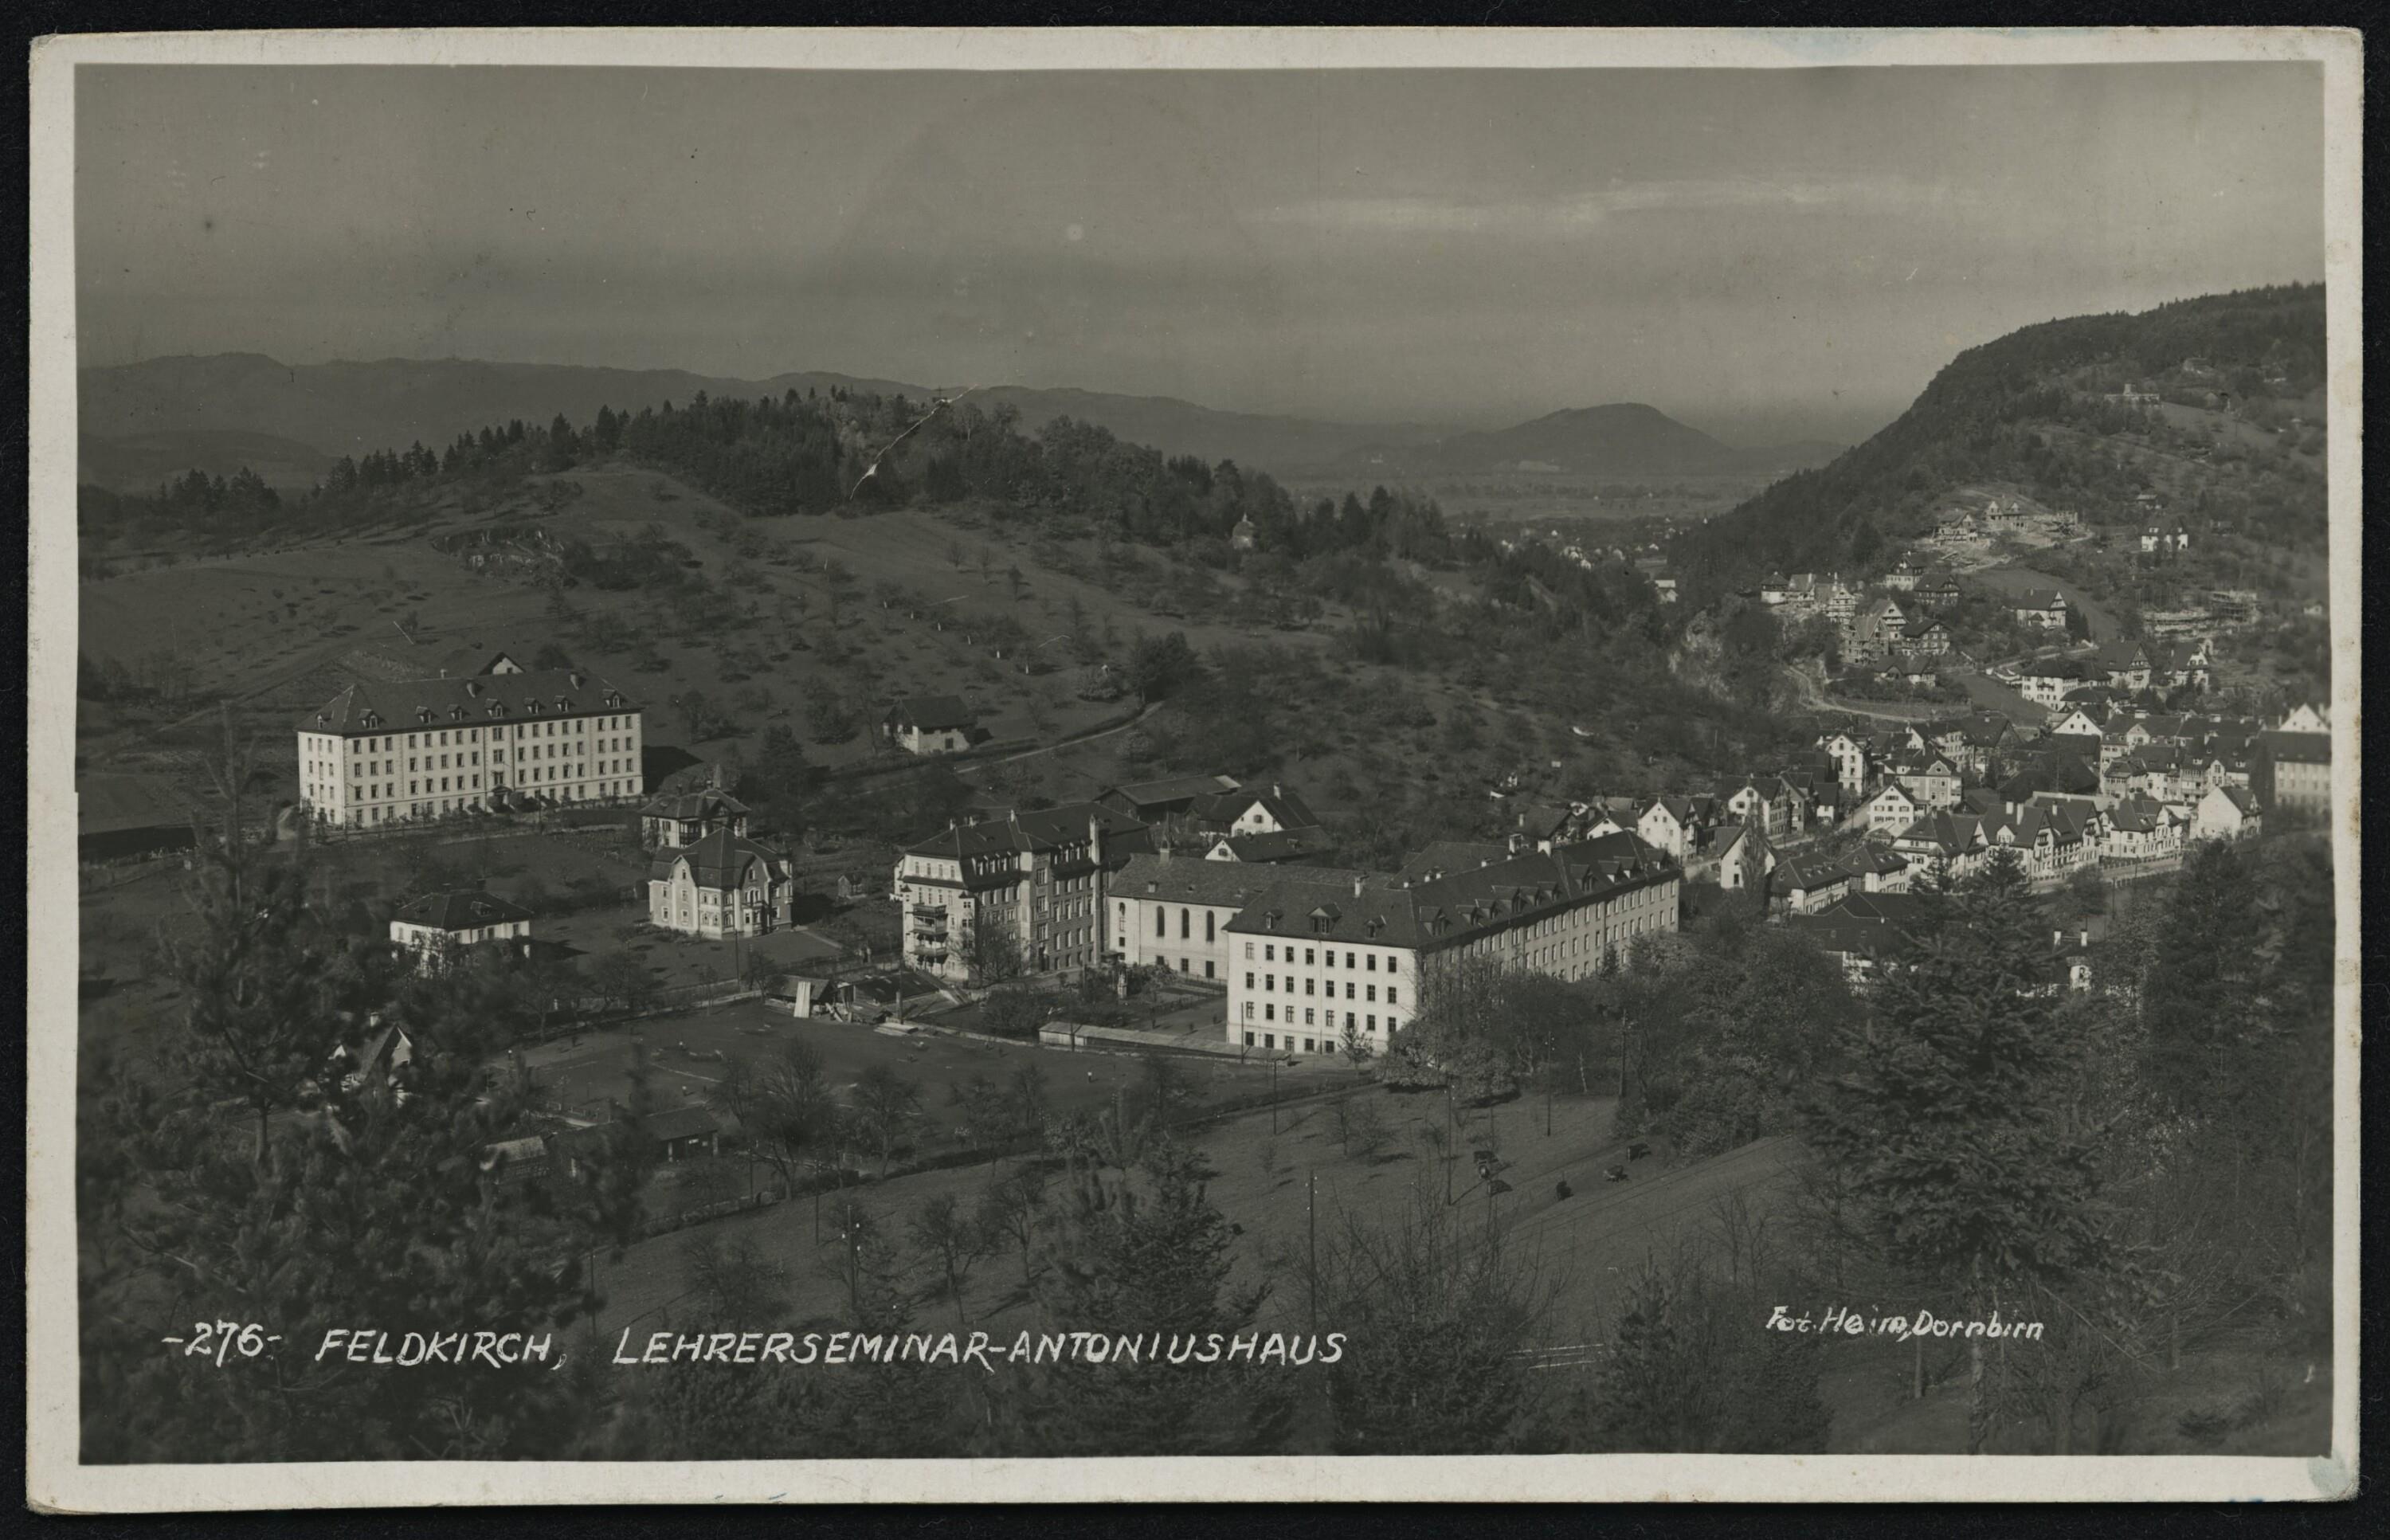 Feldkirch, Lehrerseminar-Antoniushaus></div>


    <hr>
    <div class=